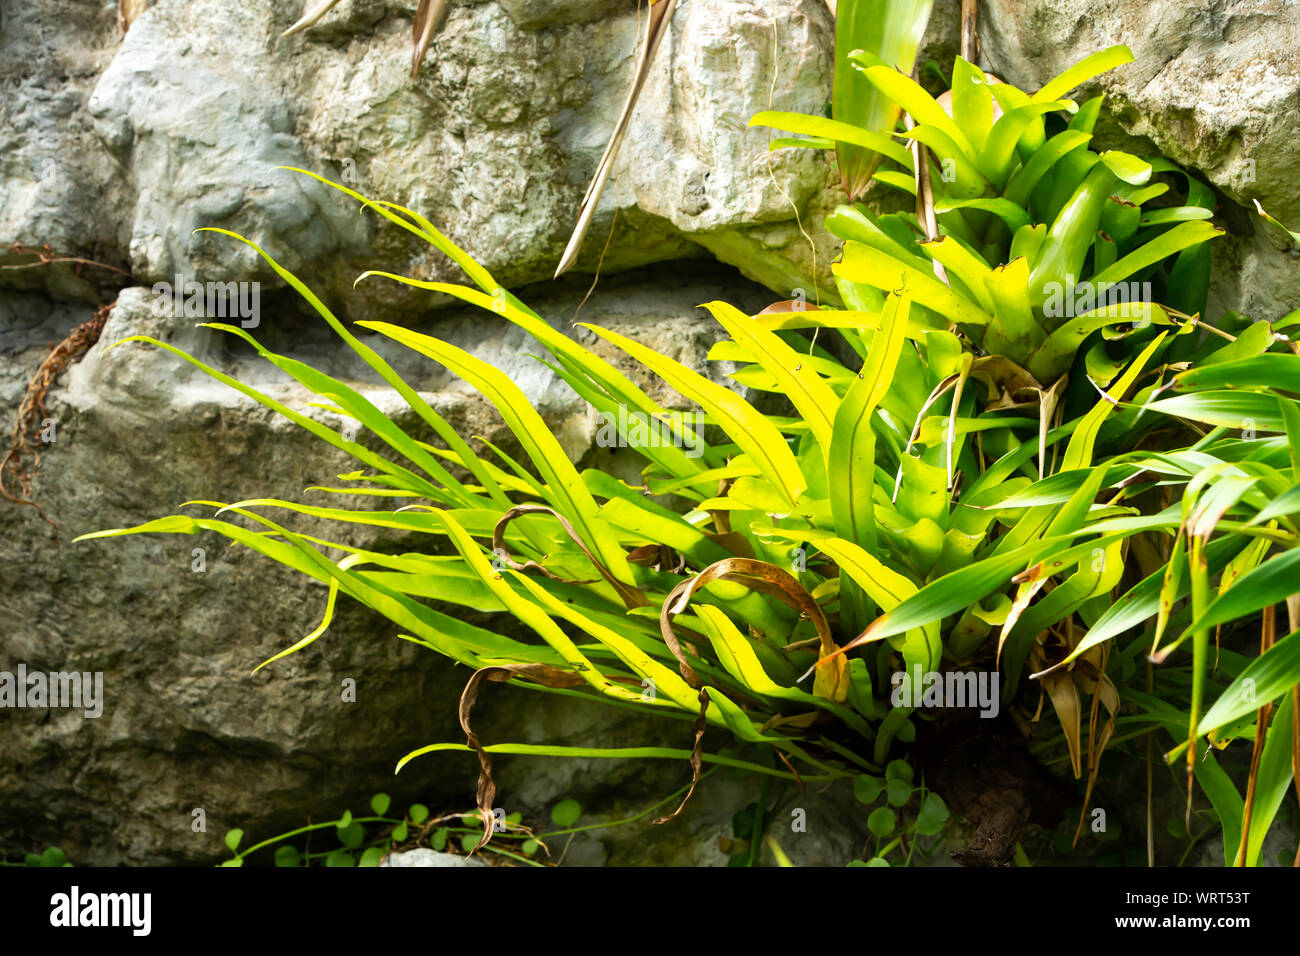 Bromeliad tree ( Aechmea fasciata, Guzmania, Urn Plant ) with fern clinging on the stone, Abstract graphic design Stock Photo